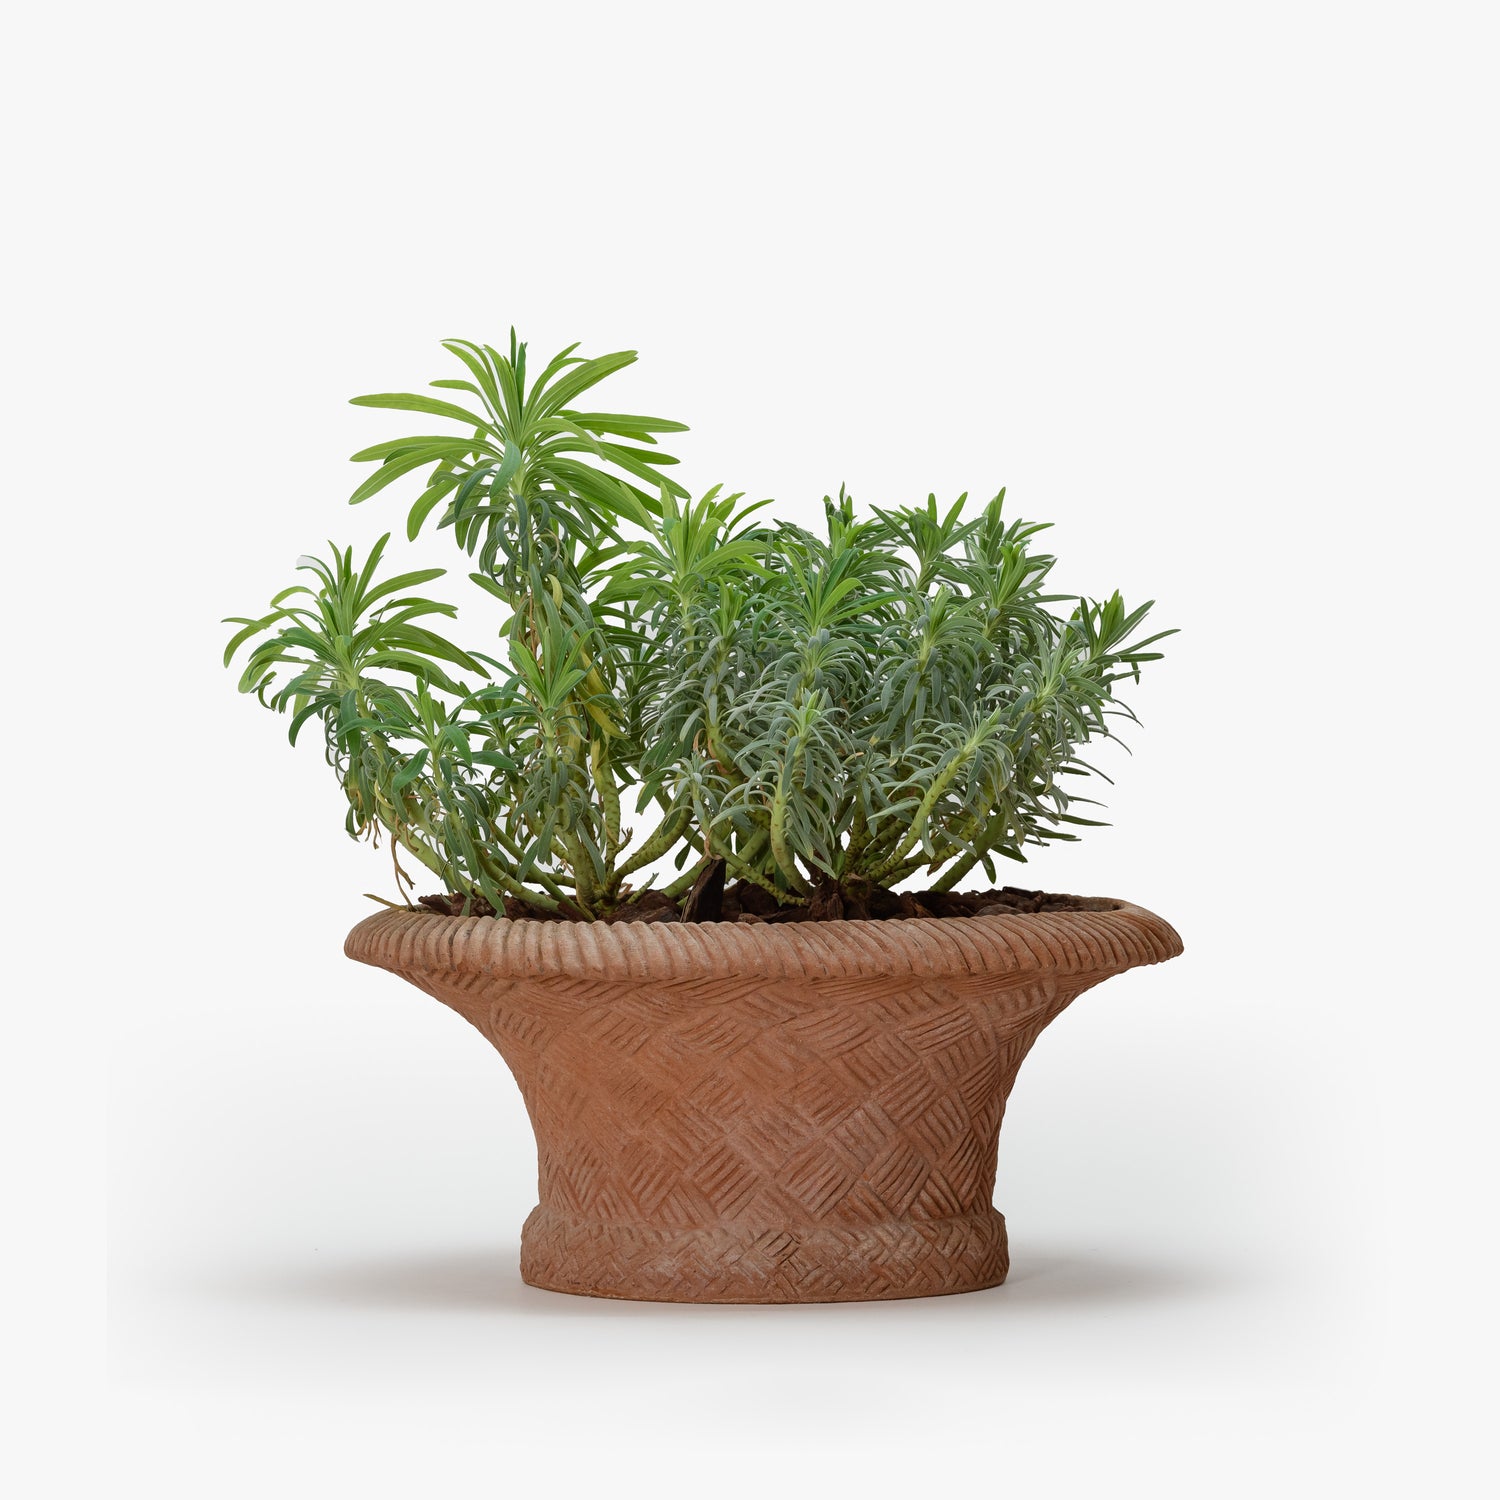 Osier vase with plant